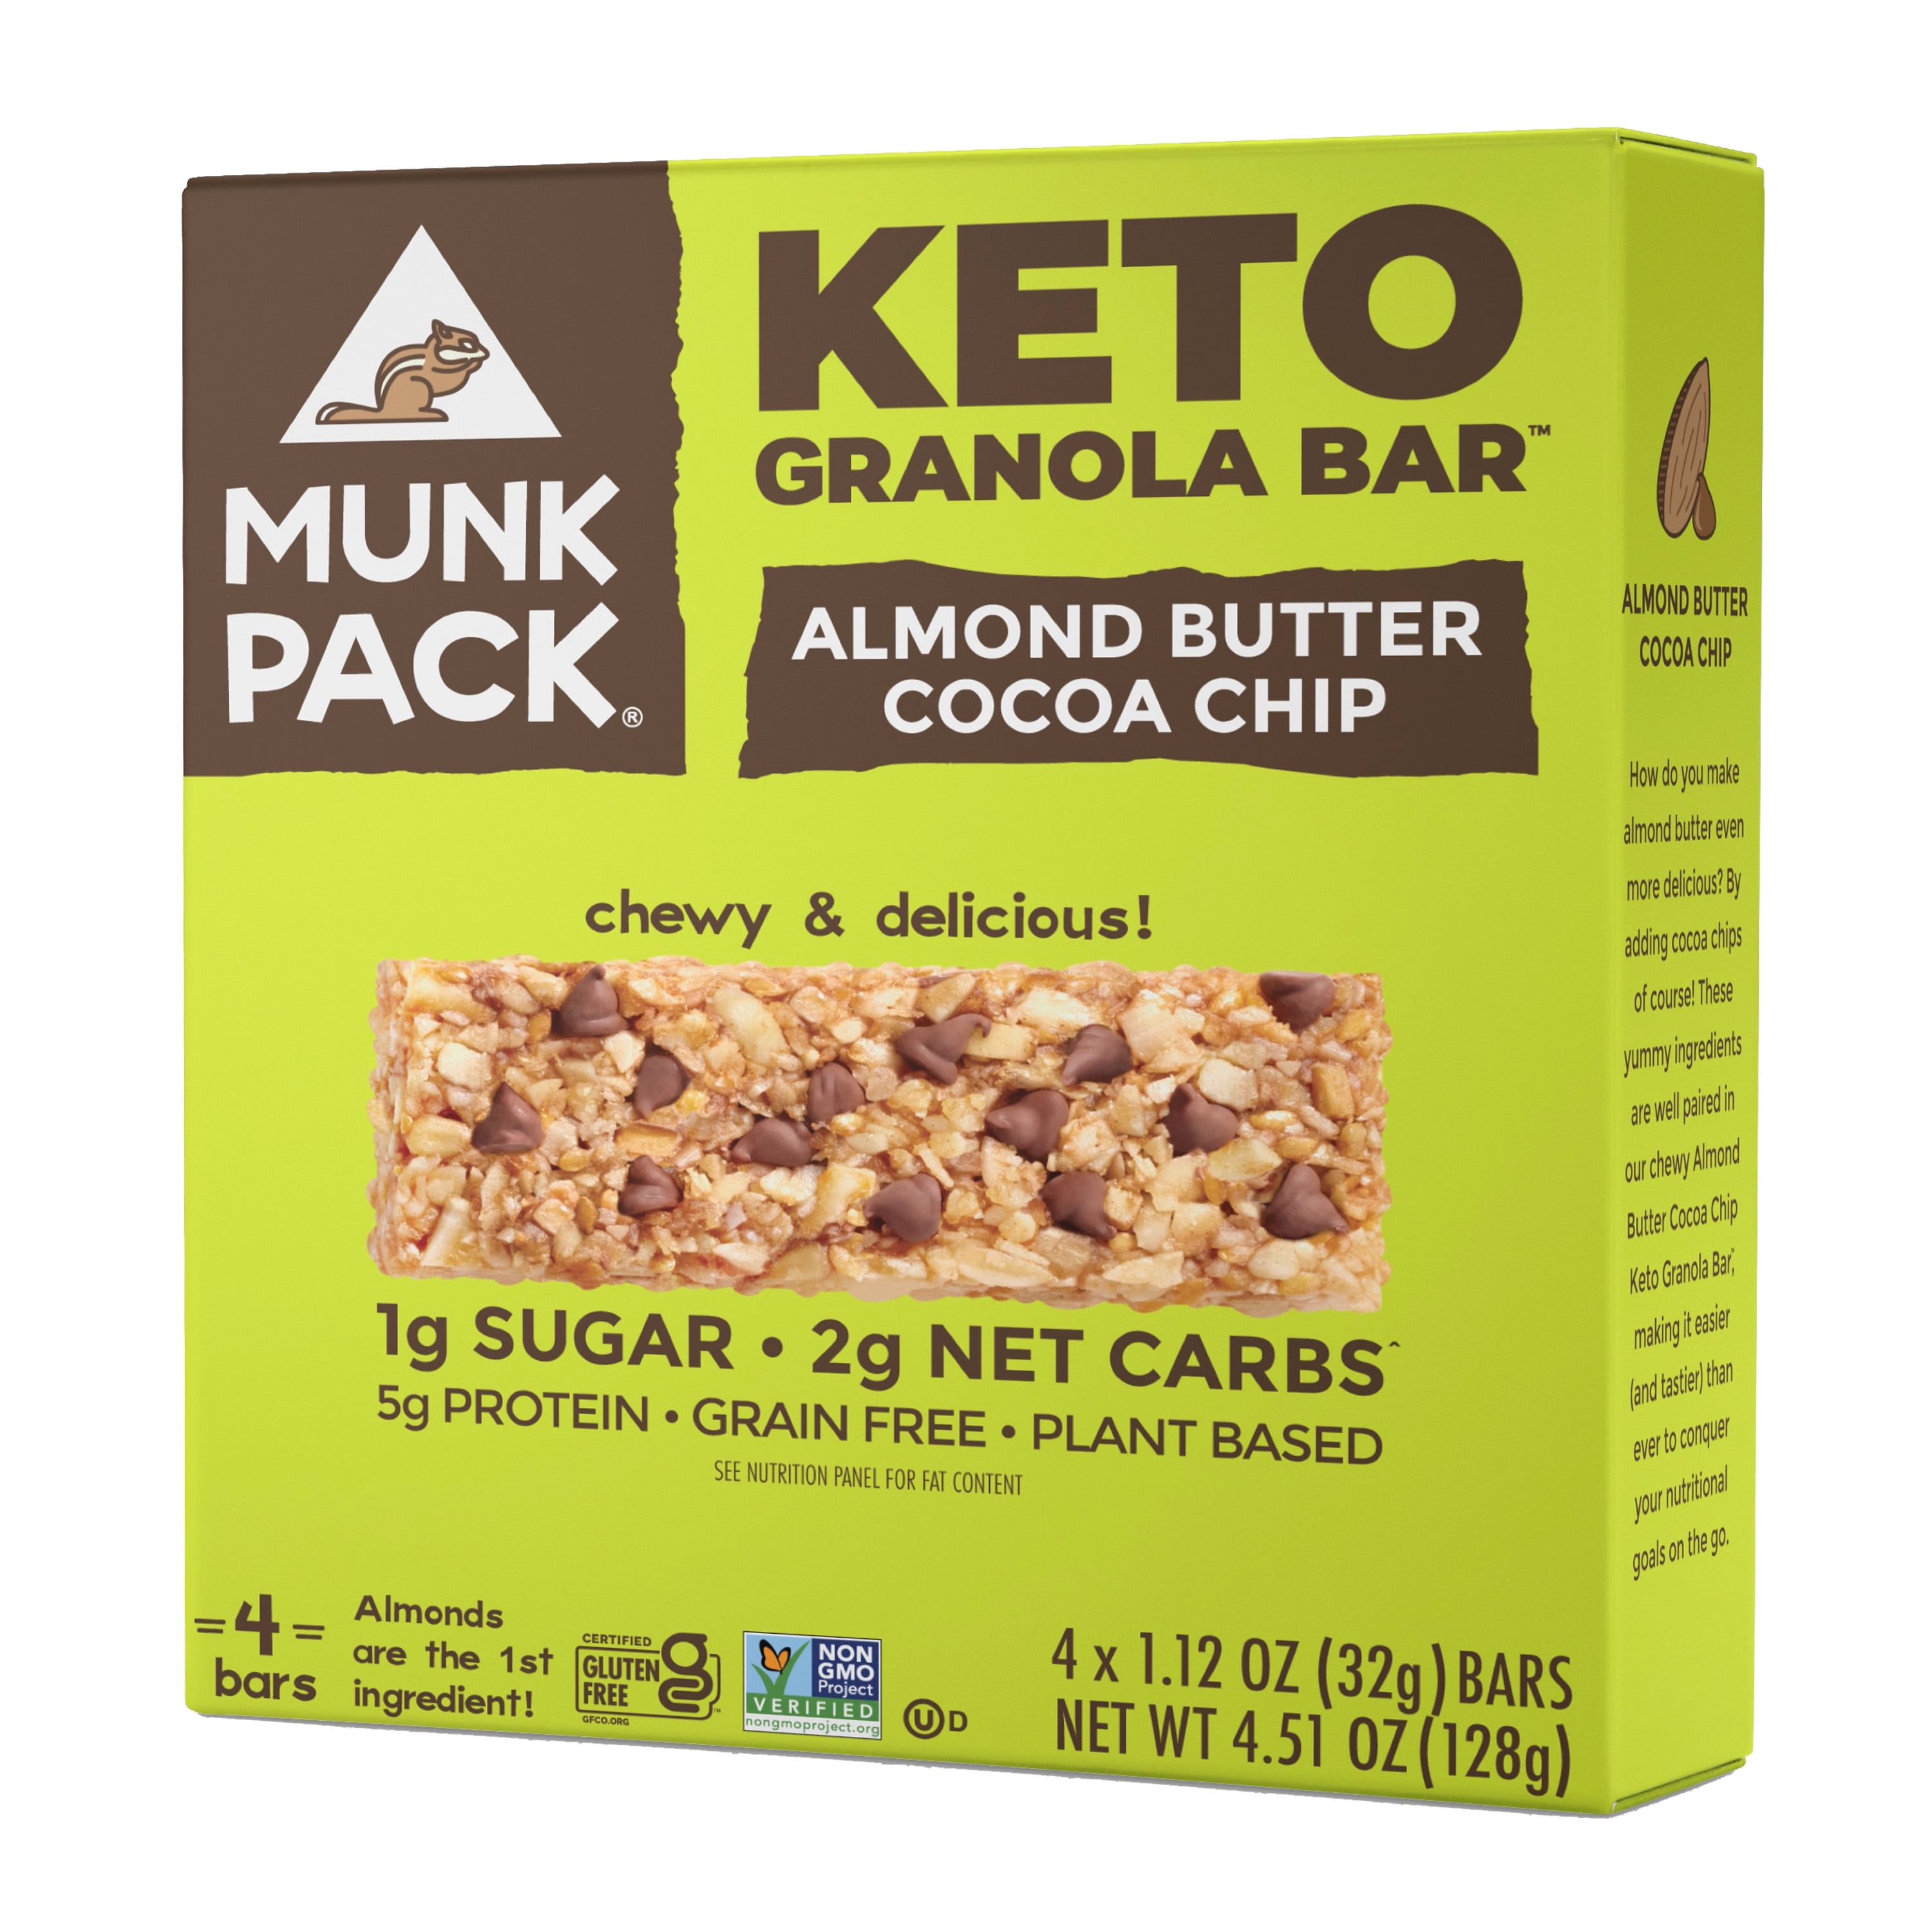 Munk Pack Keto Granola Bar Almond Butter Cocoa Chip, 4 Ct